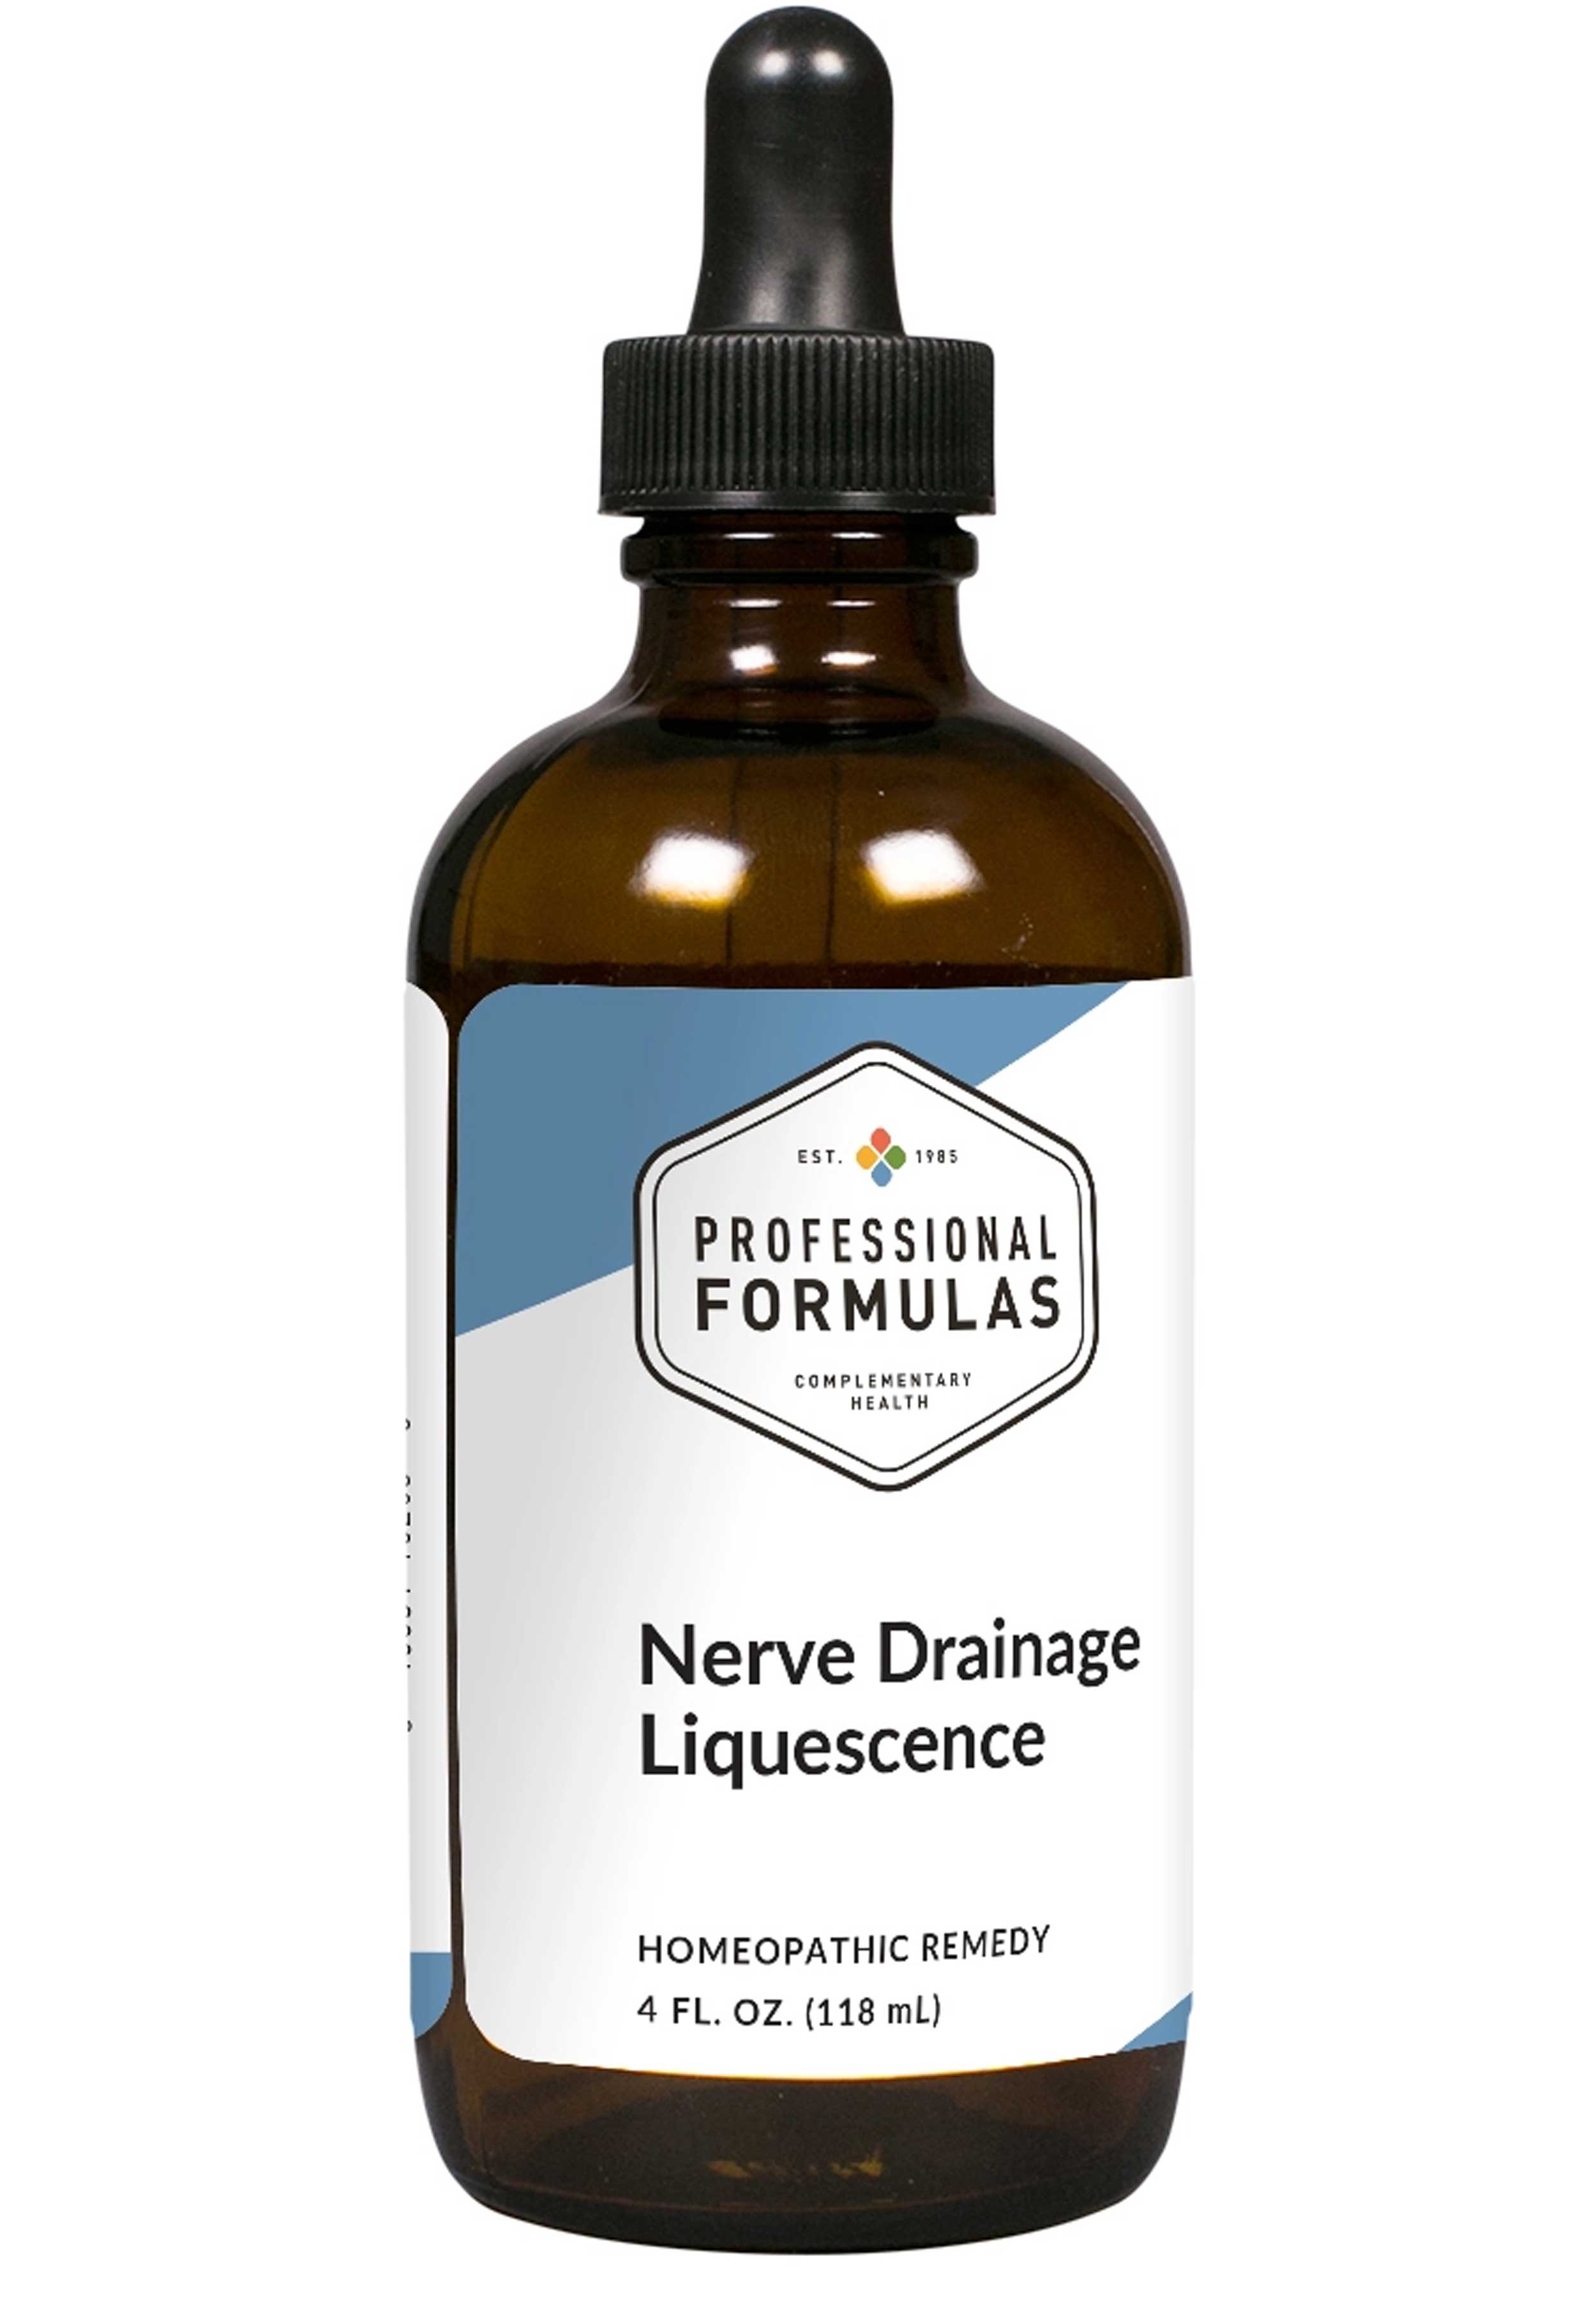 Professional Formulas Nerve Drainage Liquescence